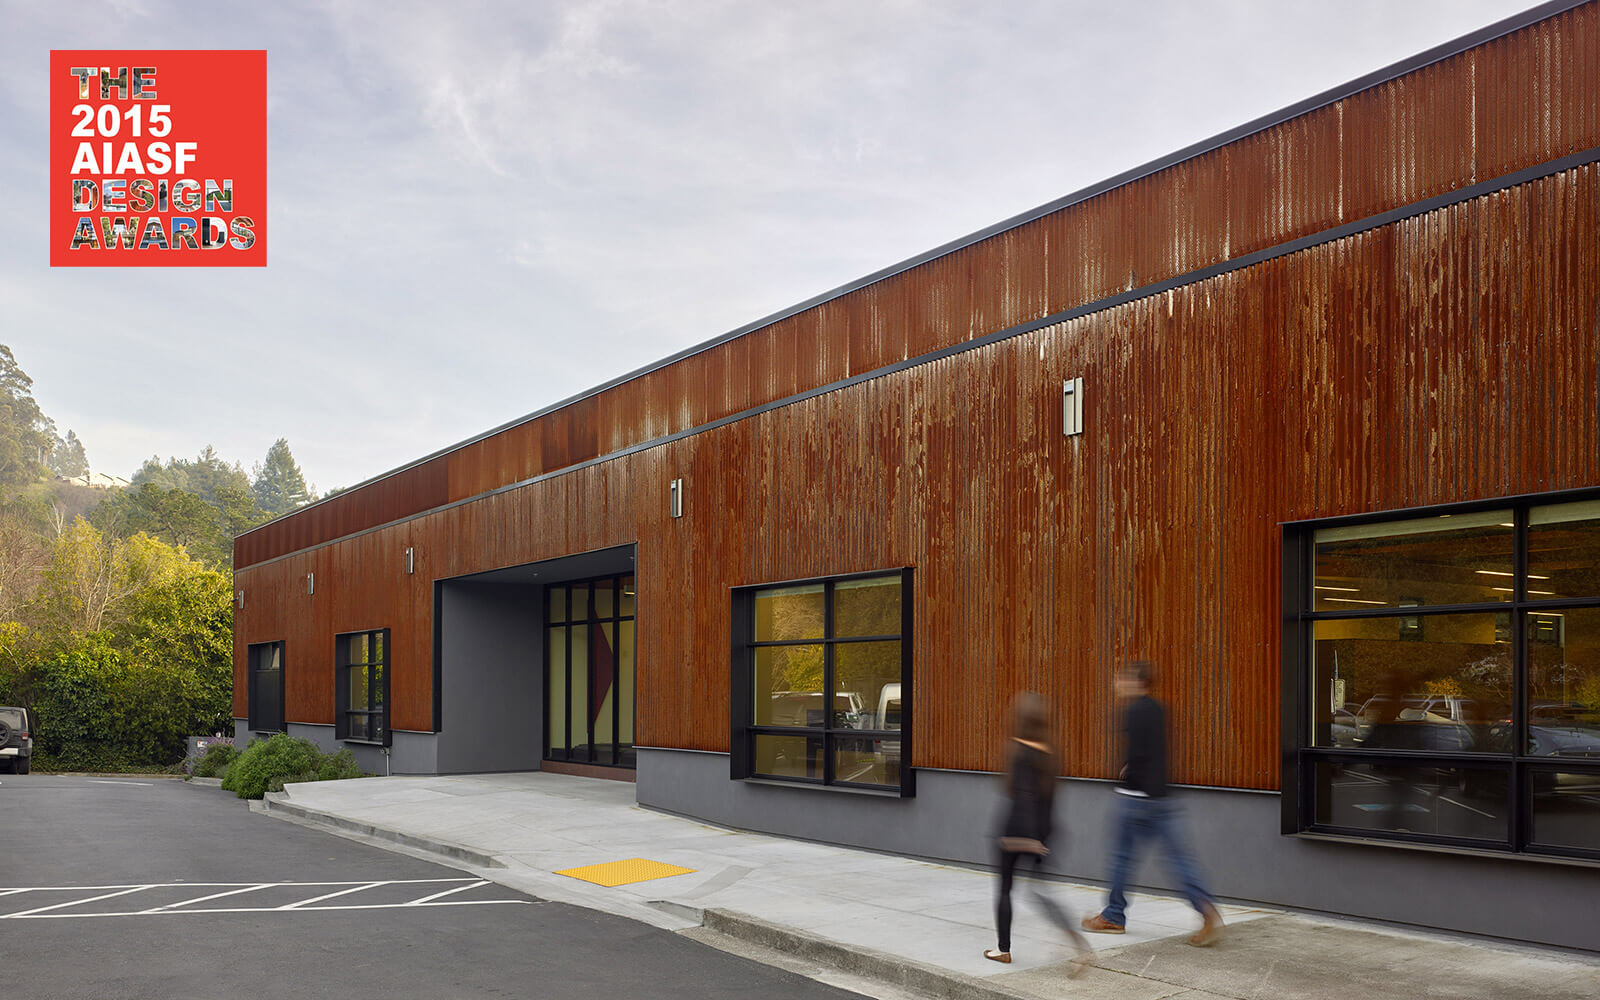 studio vara workplace redwood highway exterior award-winning